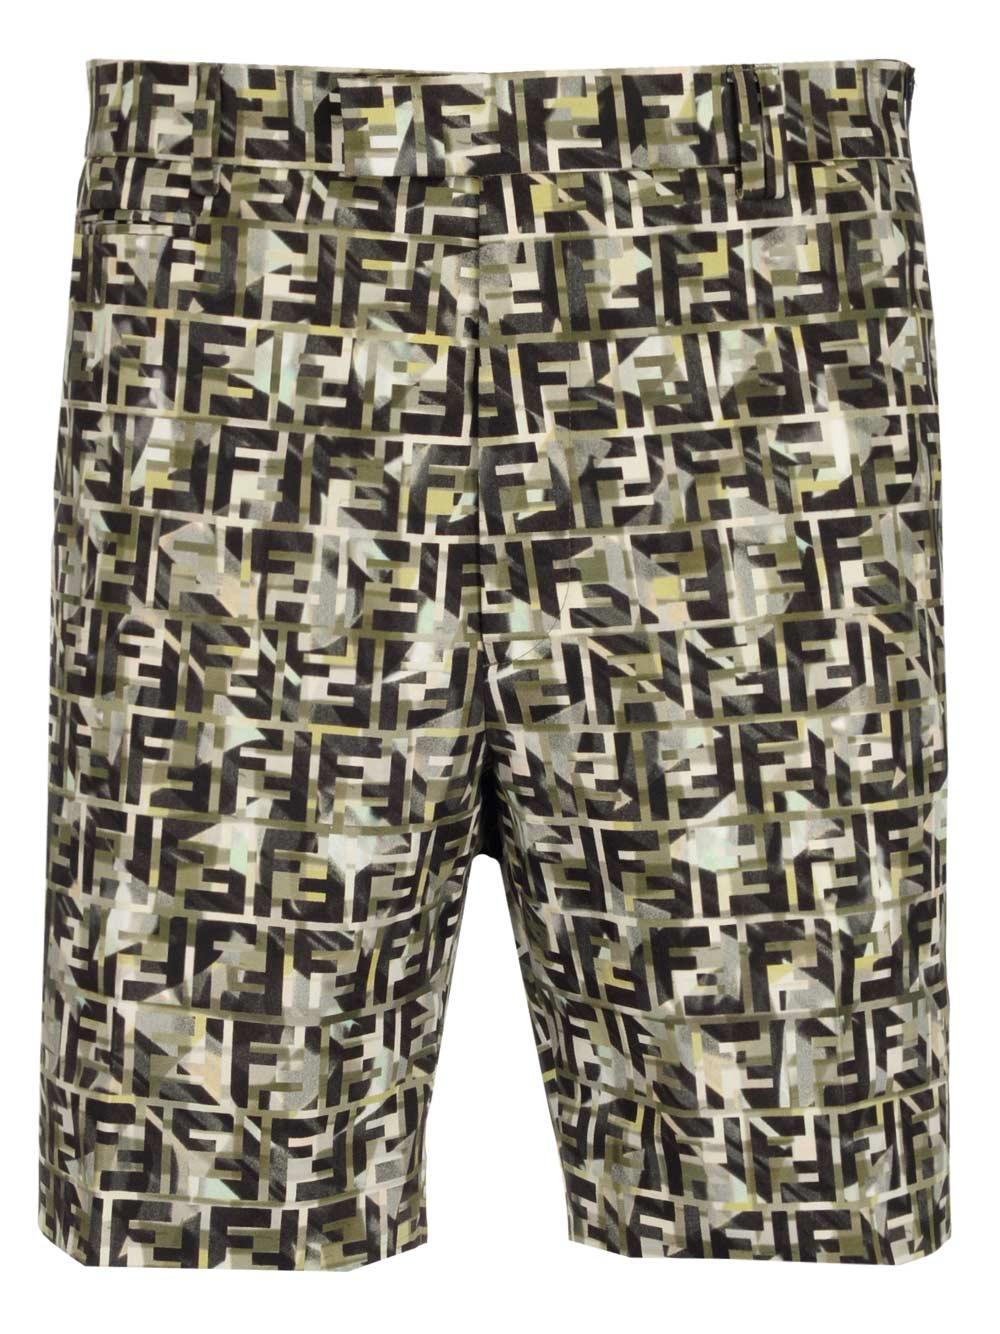 Fendi Cotton Ff Camouflage Bermuda Shorts in Green for Men - Lyst